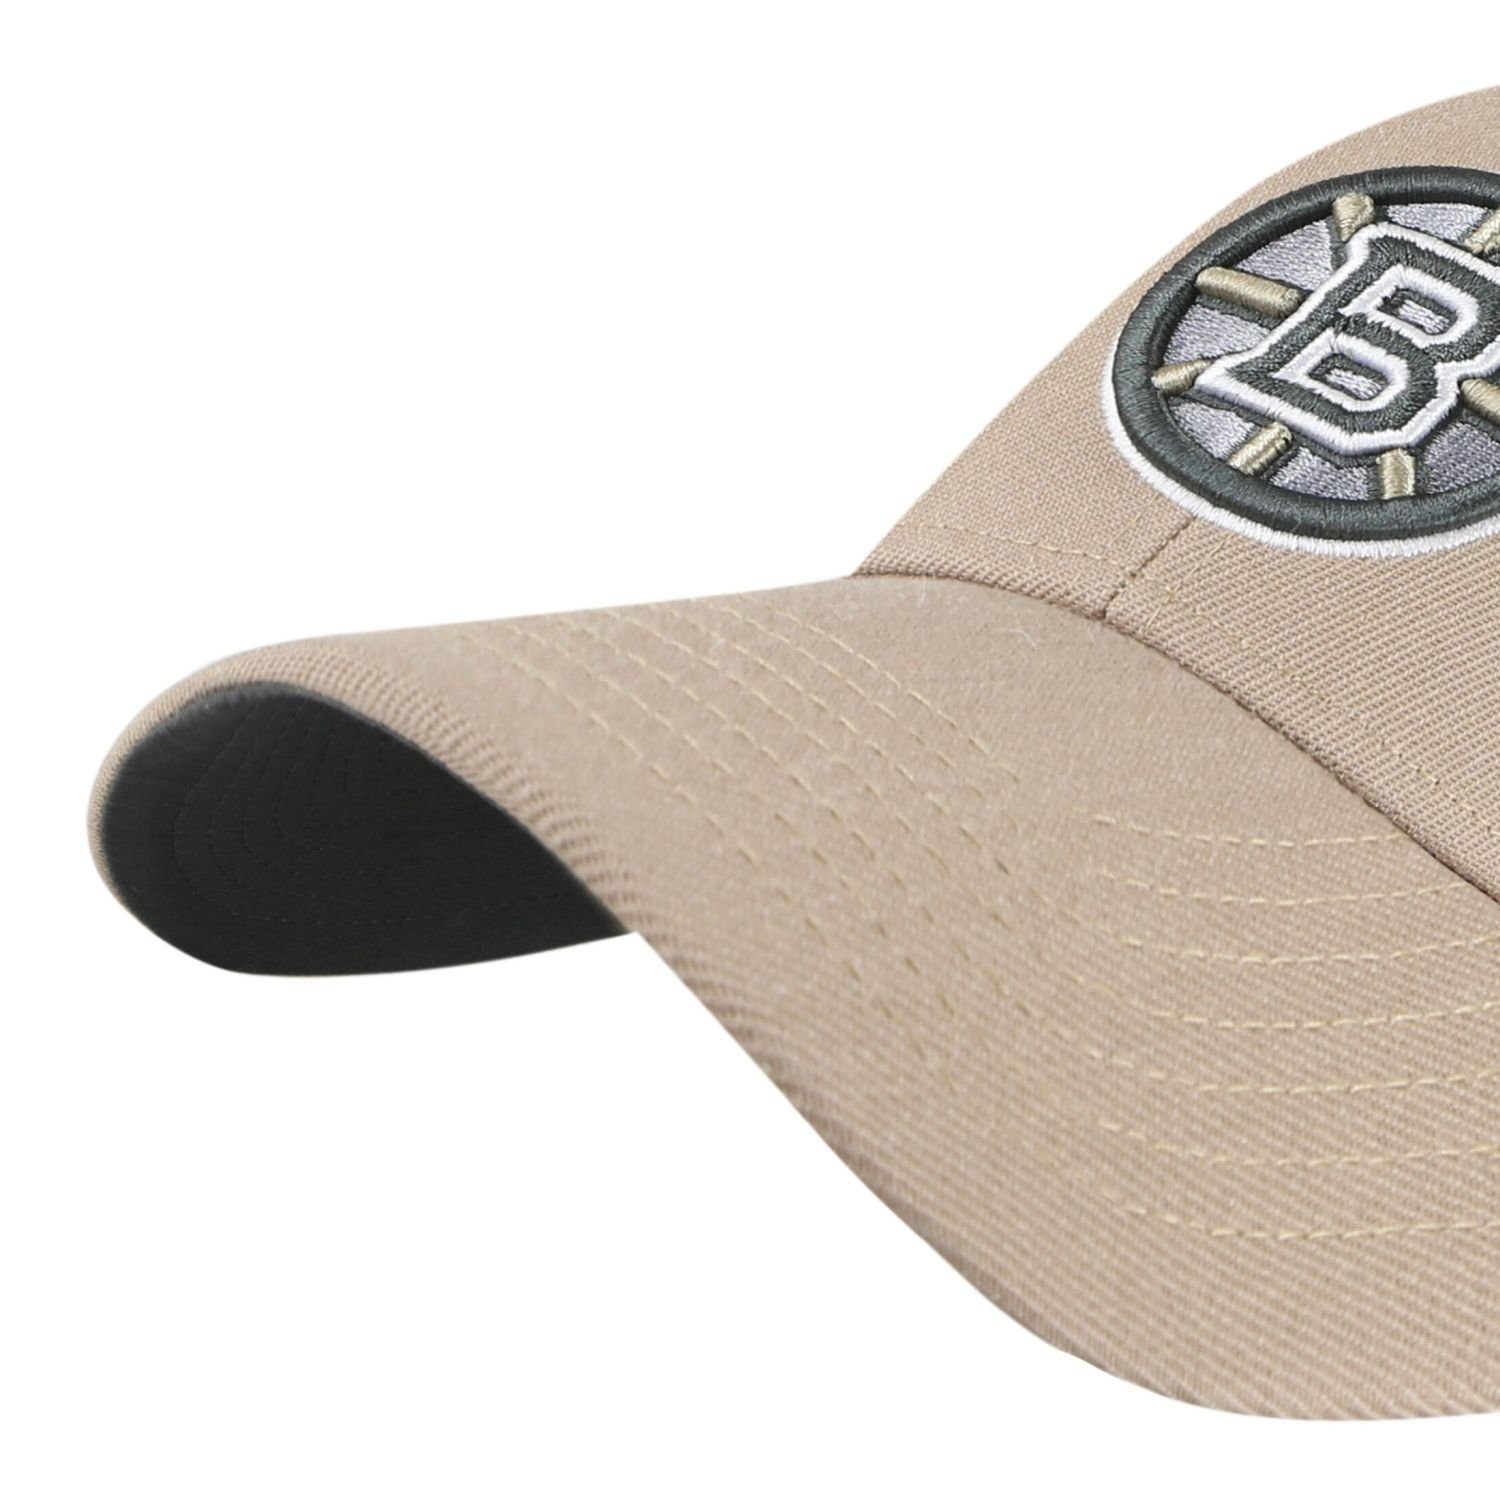 x27;47 Brand Snapback Cap Curved Bruins NHL Boston